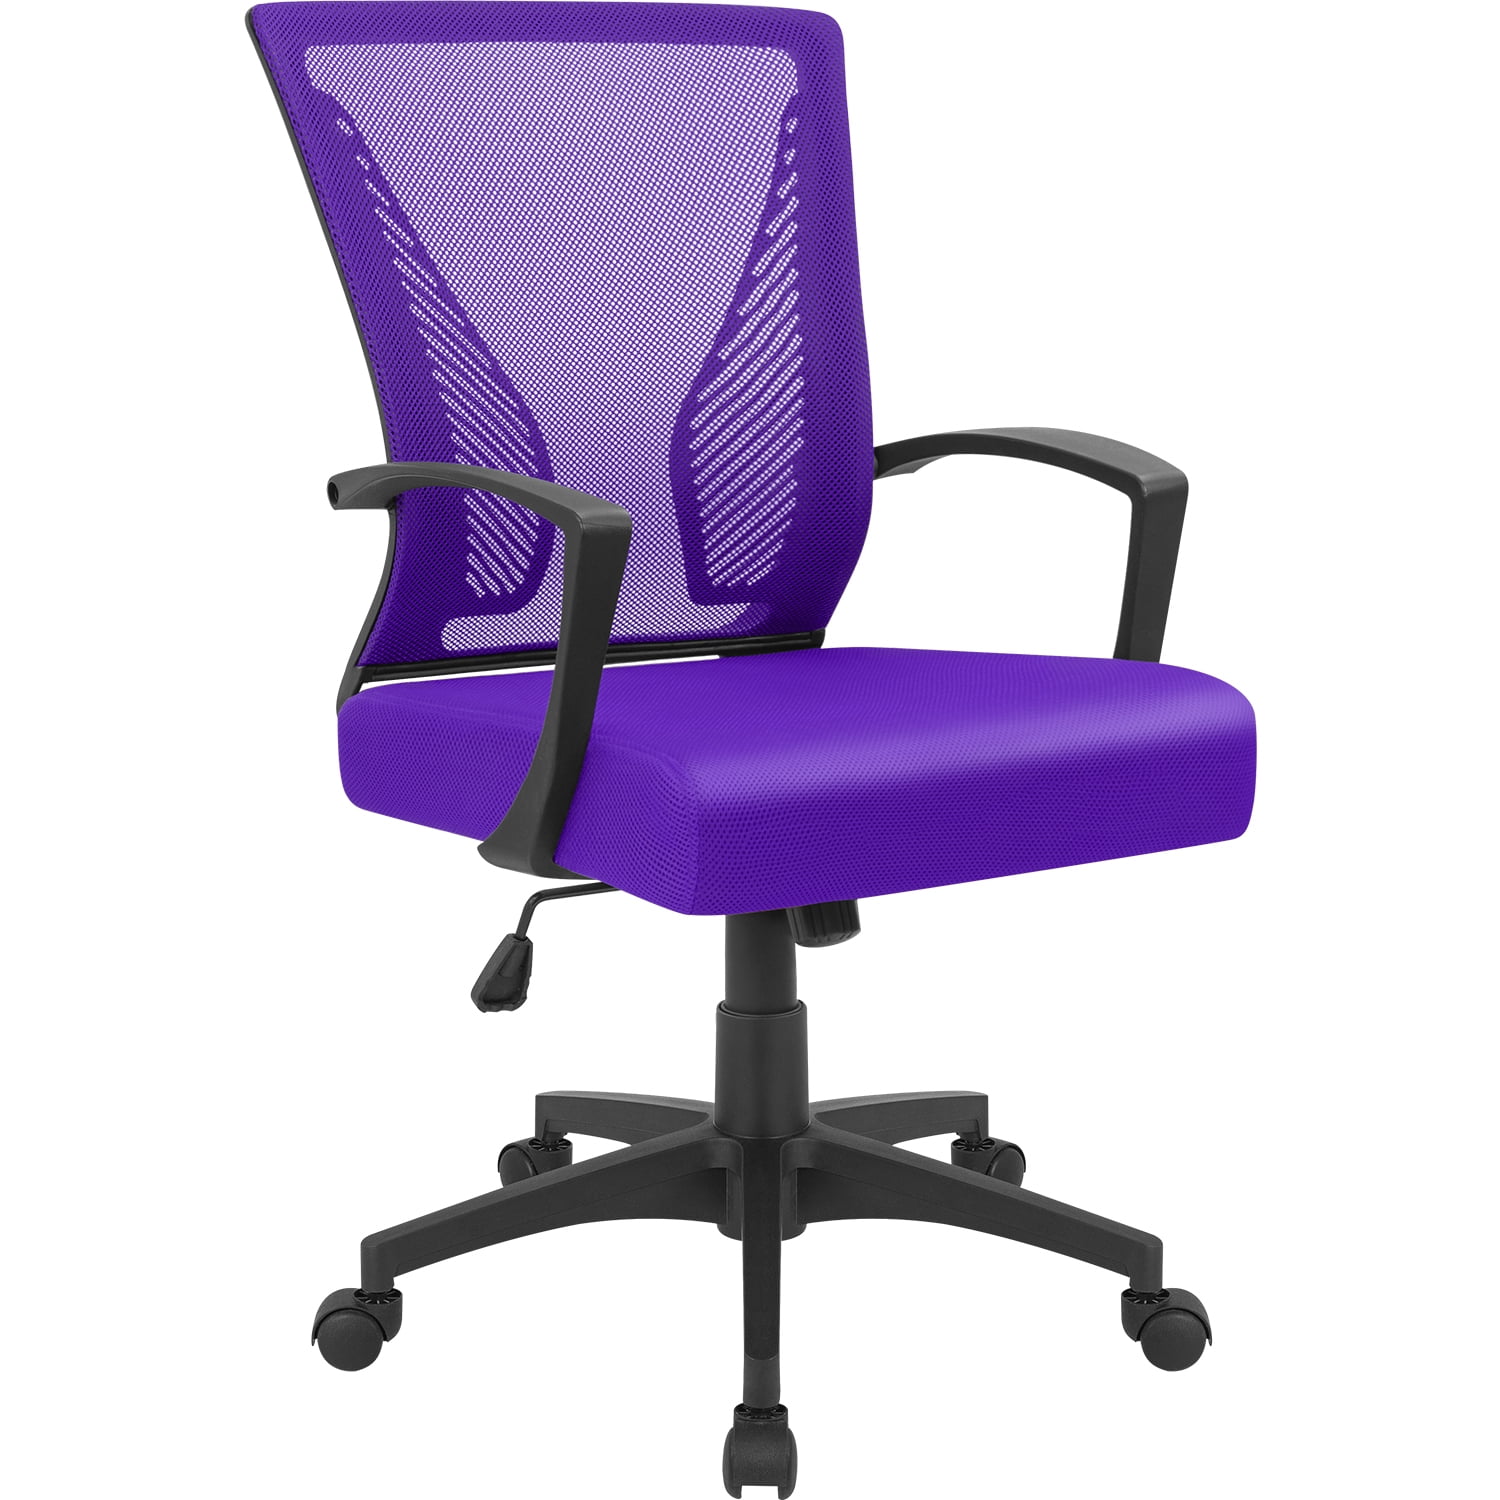 Relaxdays Office Chair Height Adjustable Children Swivel Chair Ergonomic 90kg Capacity Purple H102 x W55 x D55 cm 